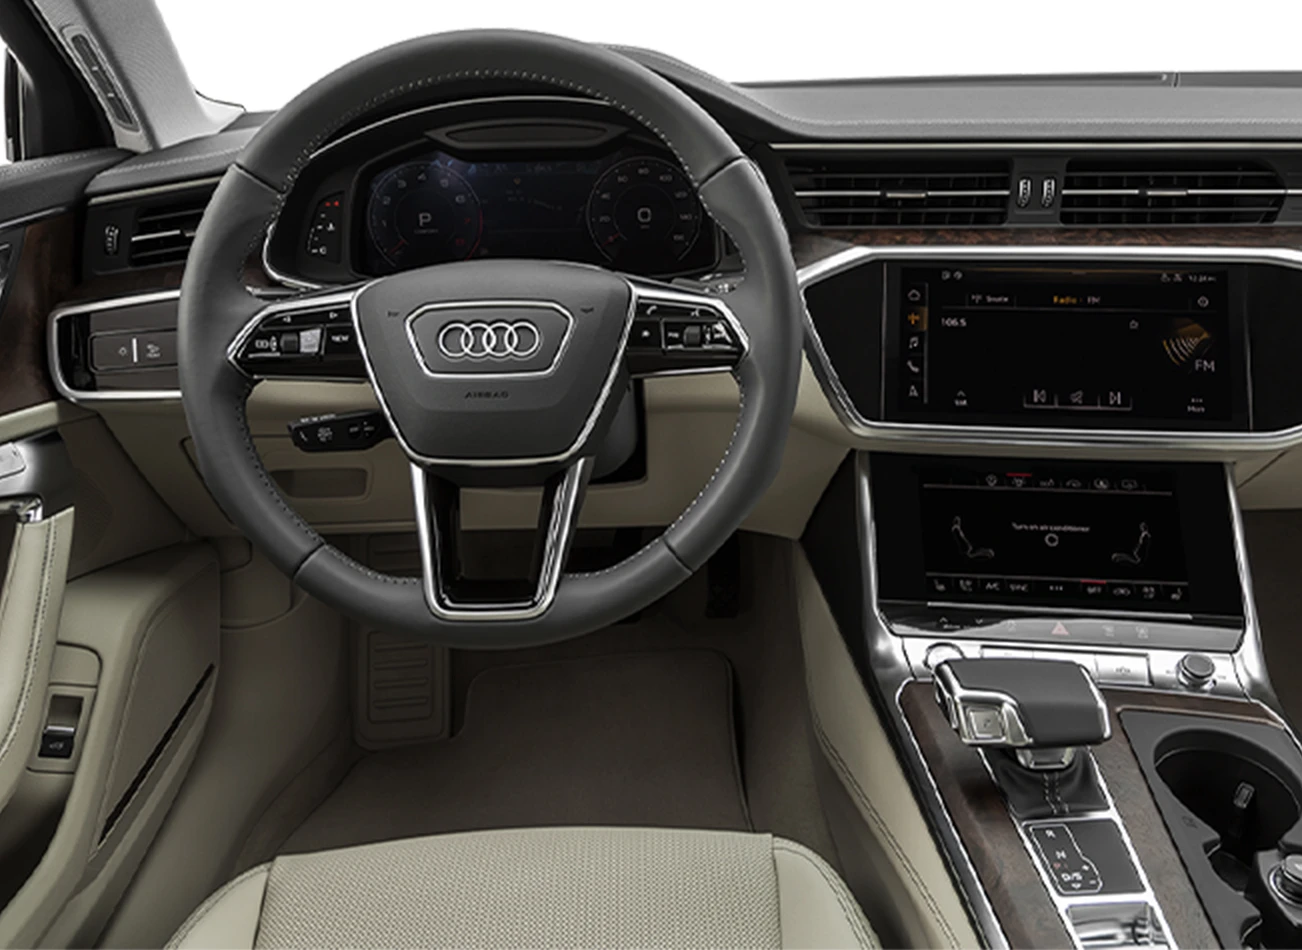 2019 Audi A6: Reviews, Photos, and More: Reasons to Buy #5 | CarMax